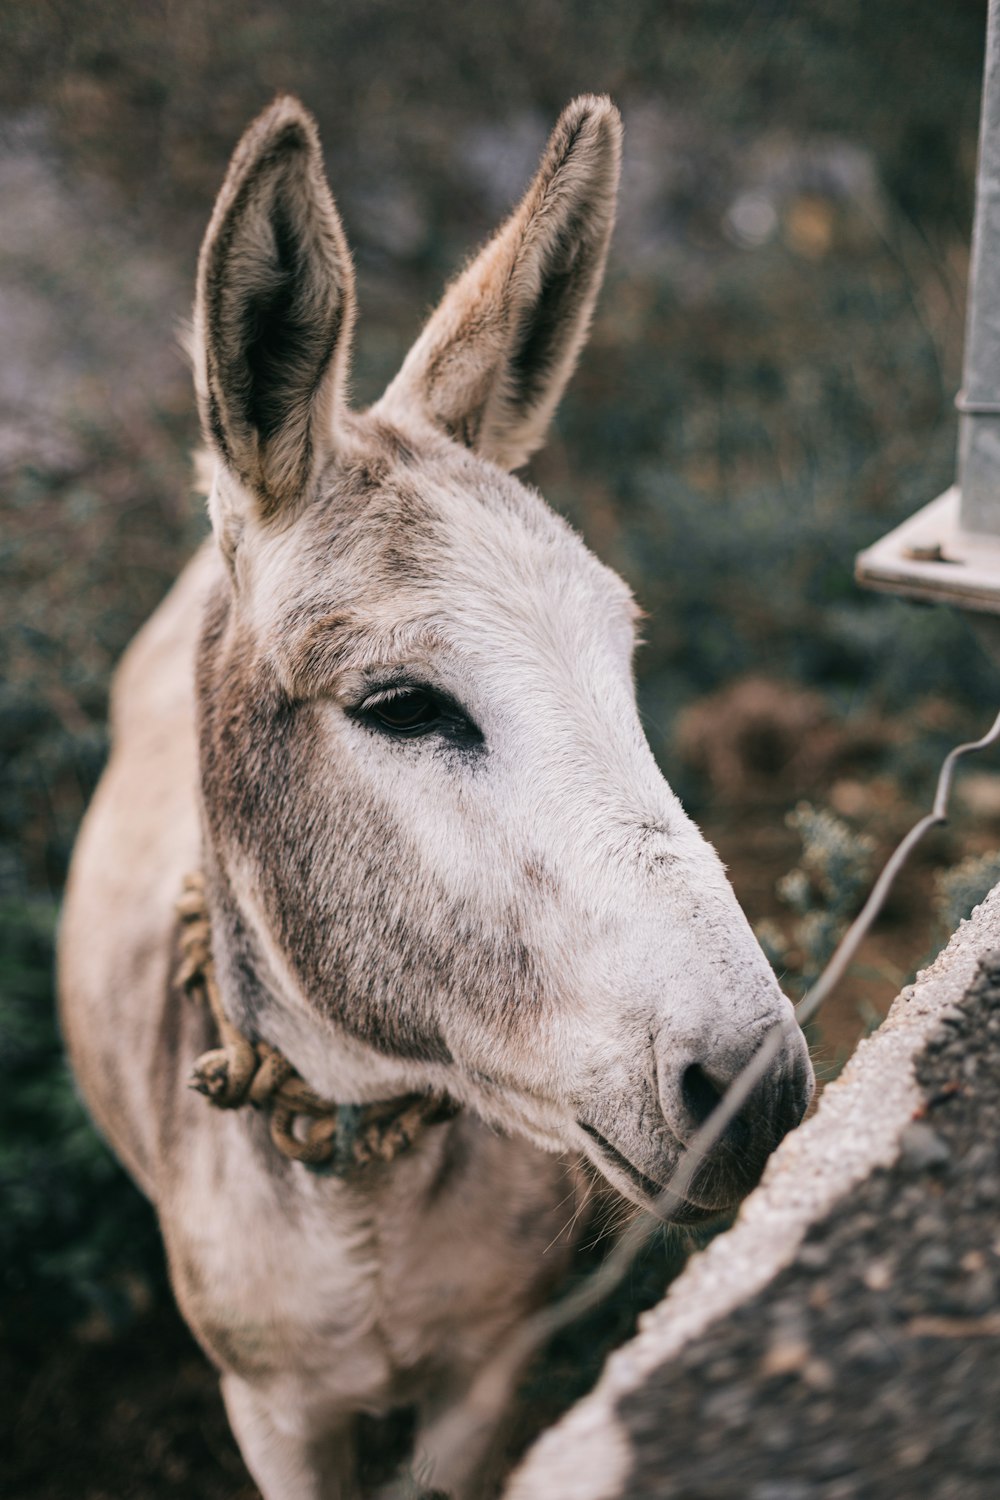 a close up of a donkey near a bird feeder